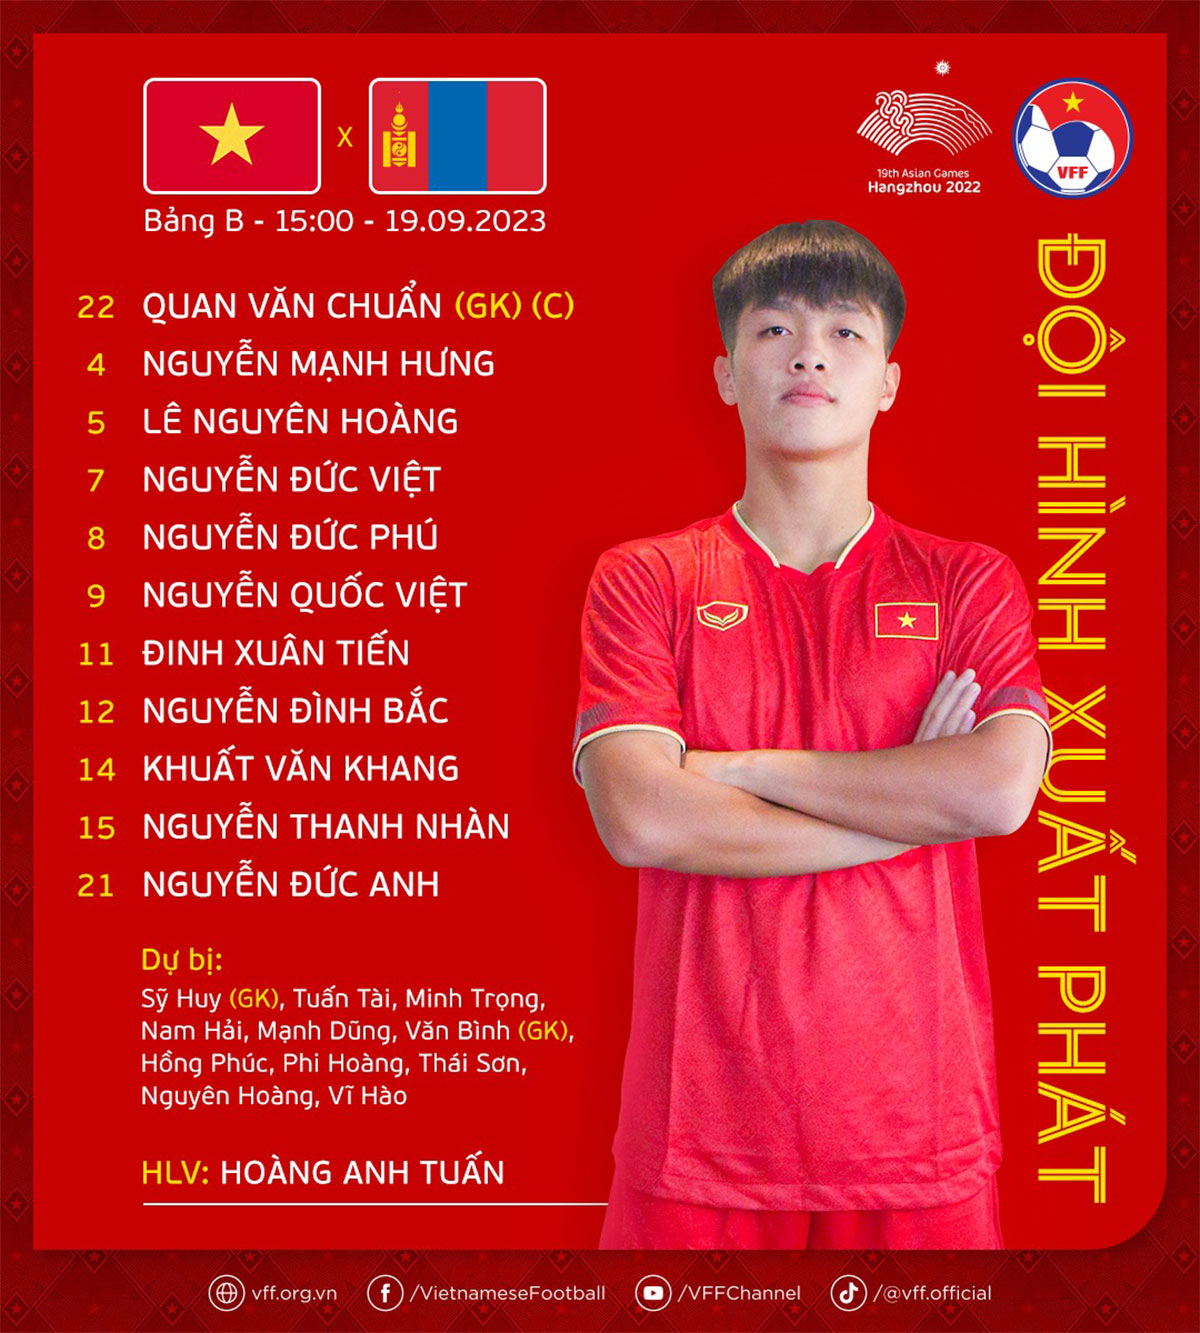 doi hinh Olympic Viet Nam vs Olympic Mong Co Asiad 2019 2